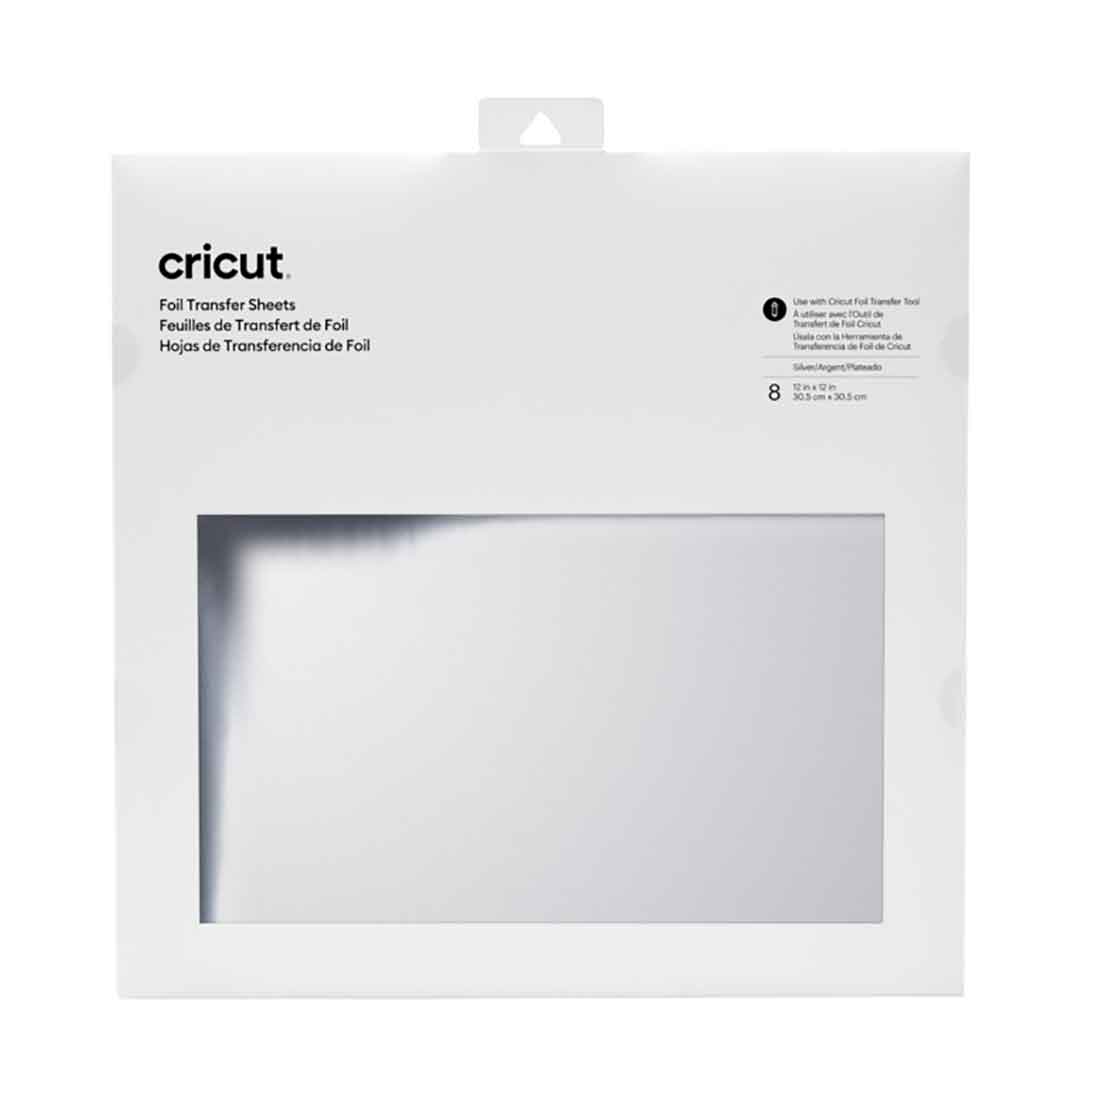 Cricut Foil Transfer Sheets, Silver (8 ct)